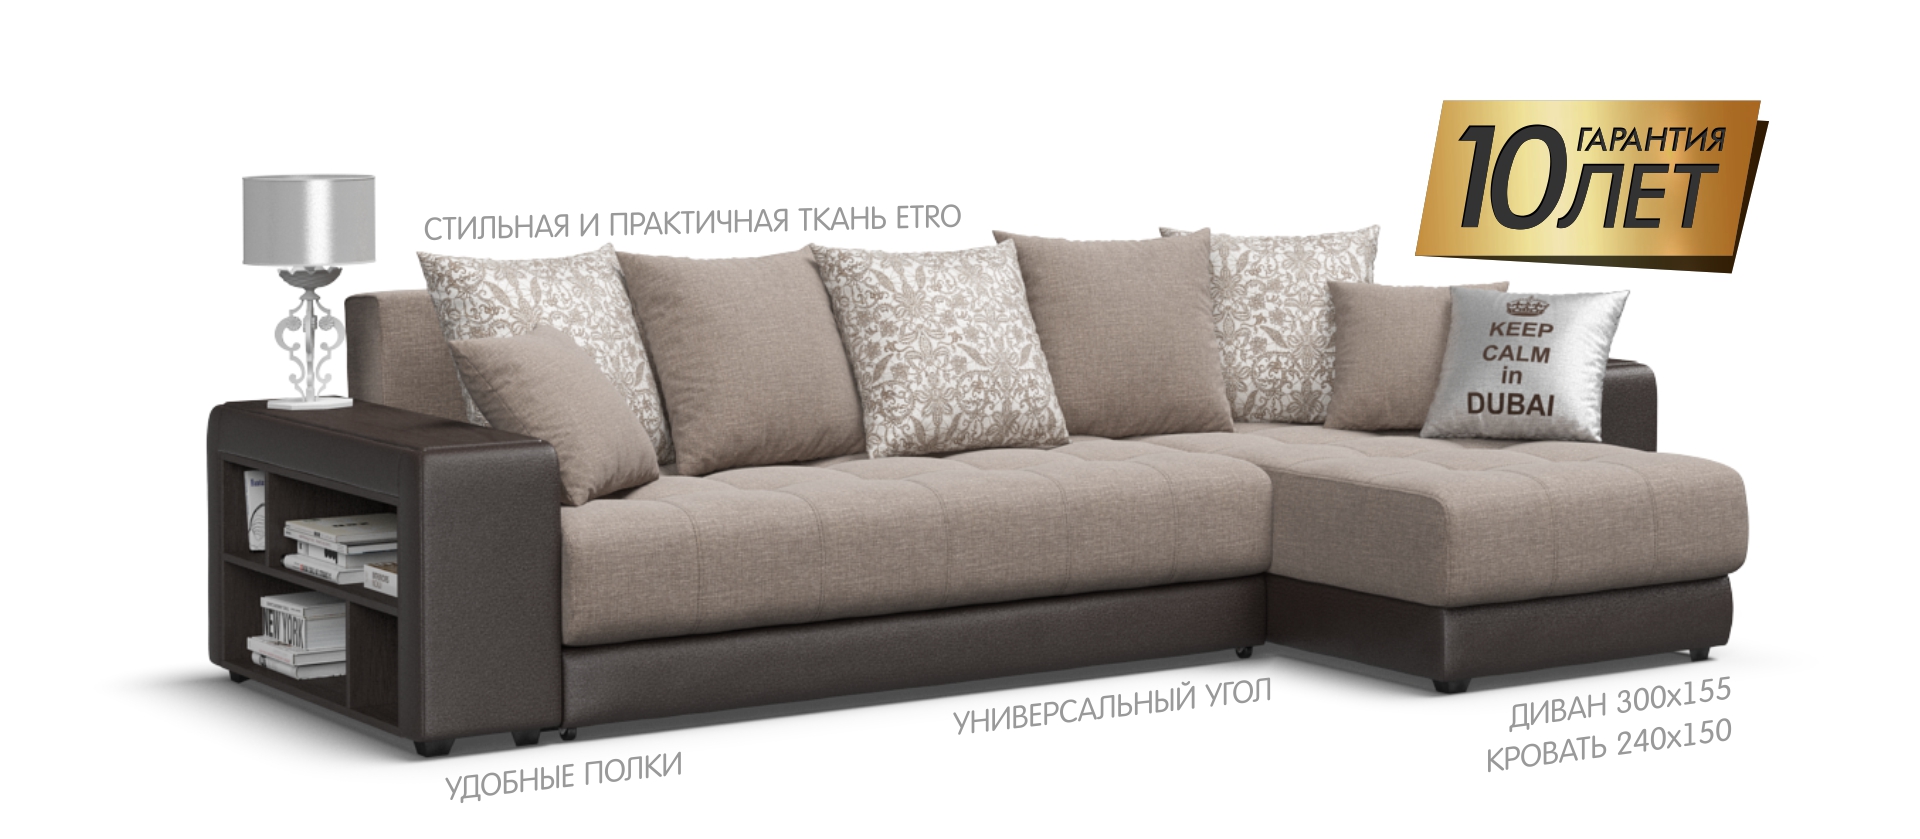 Описание дивана много мебели